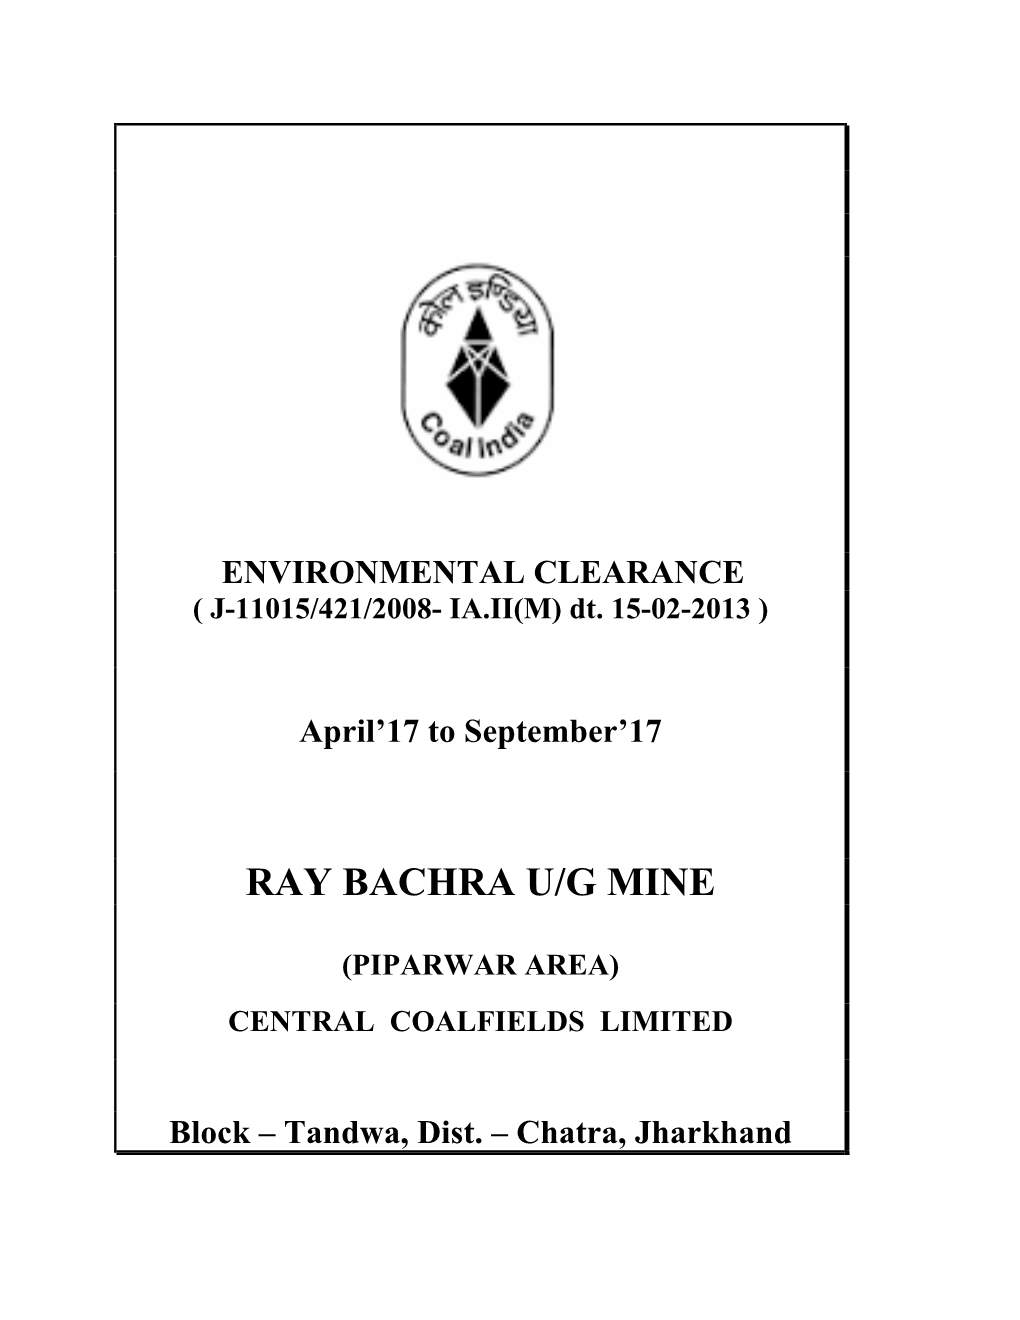 Ray Bachra U/G Mine